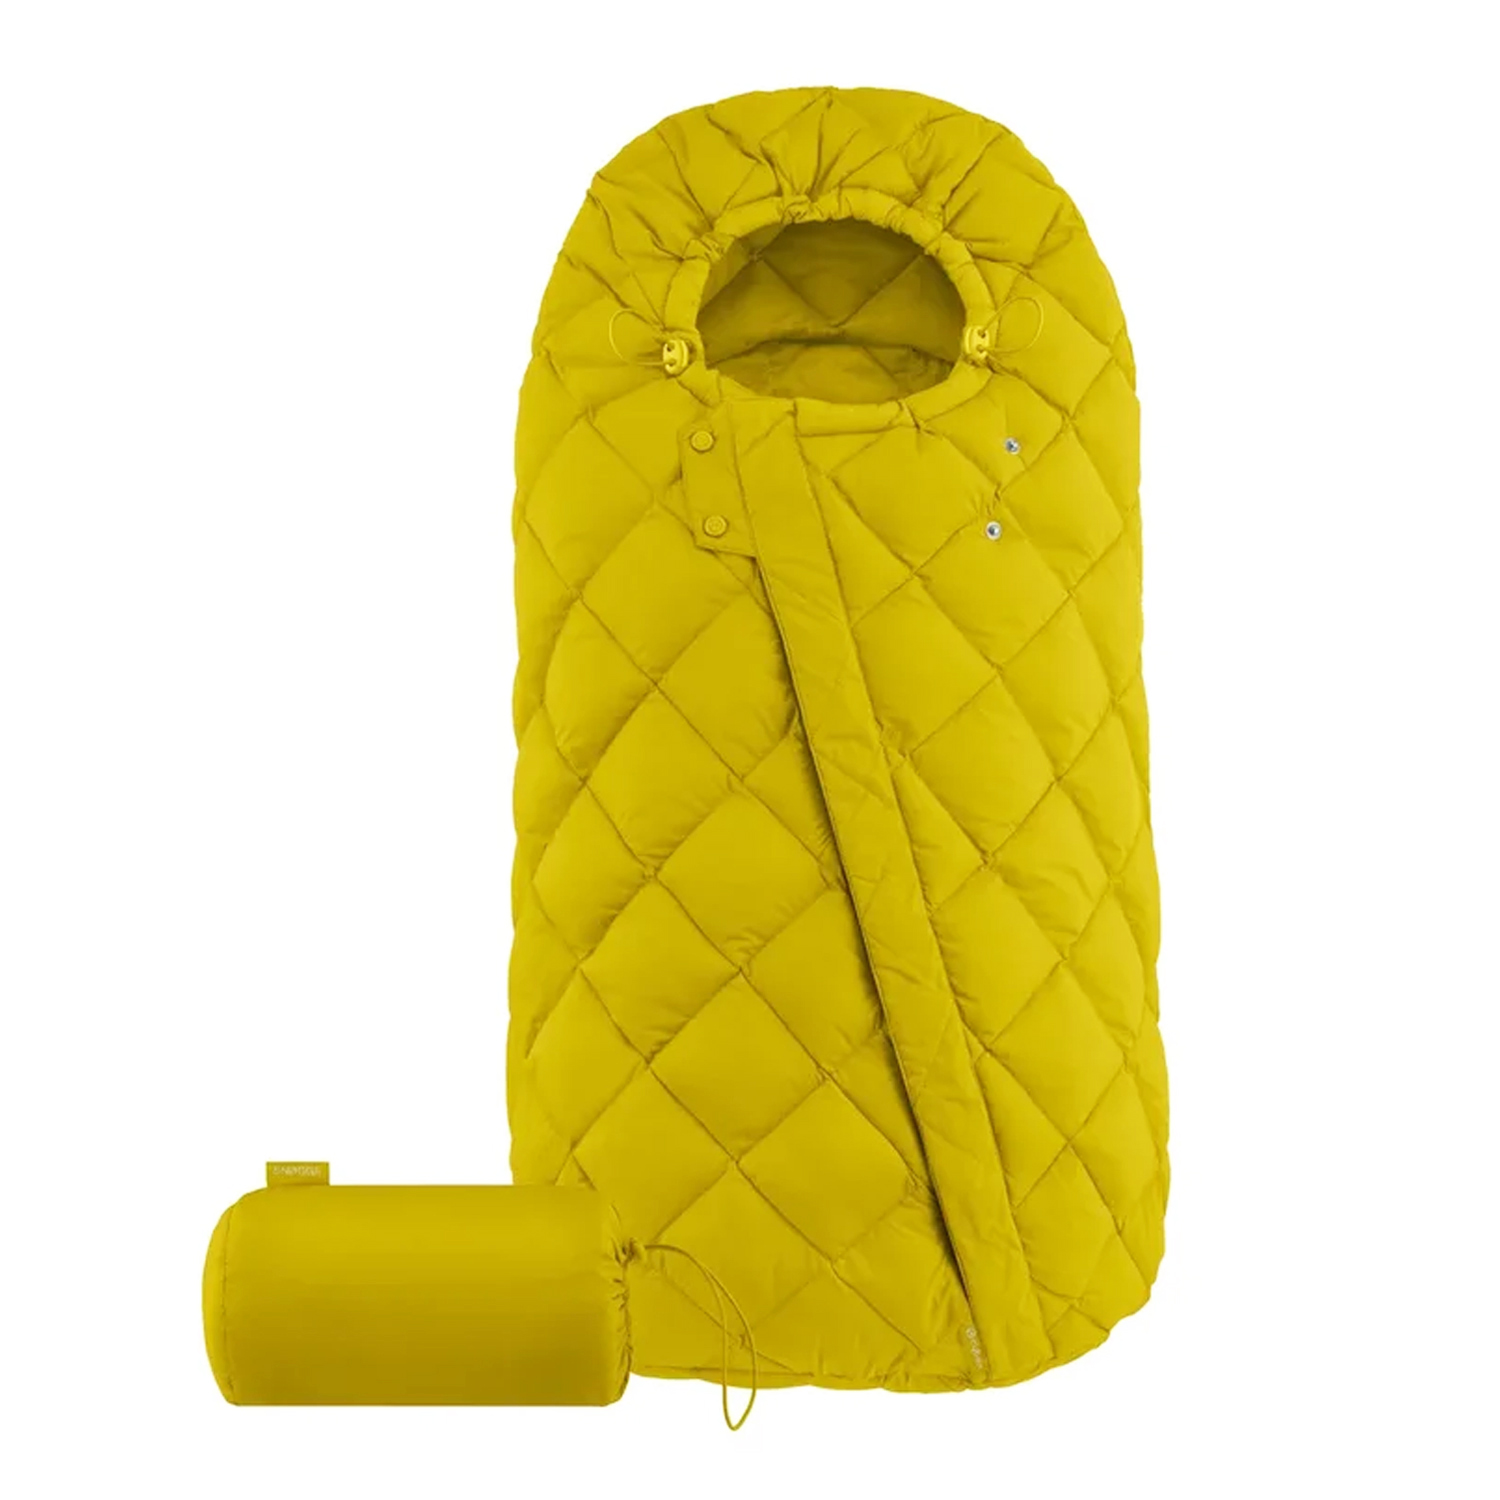 Теплый конверт для коляски Snøgga Mustard Yellow CYBEX, цвет нет цвета - фото 1